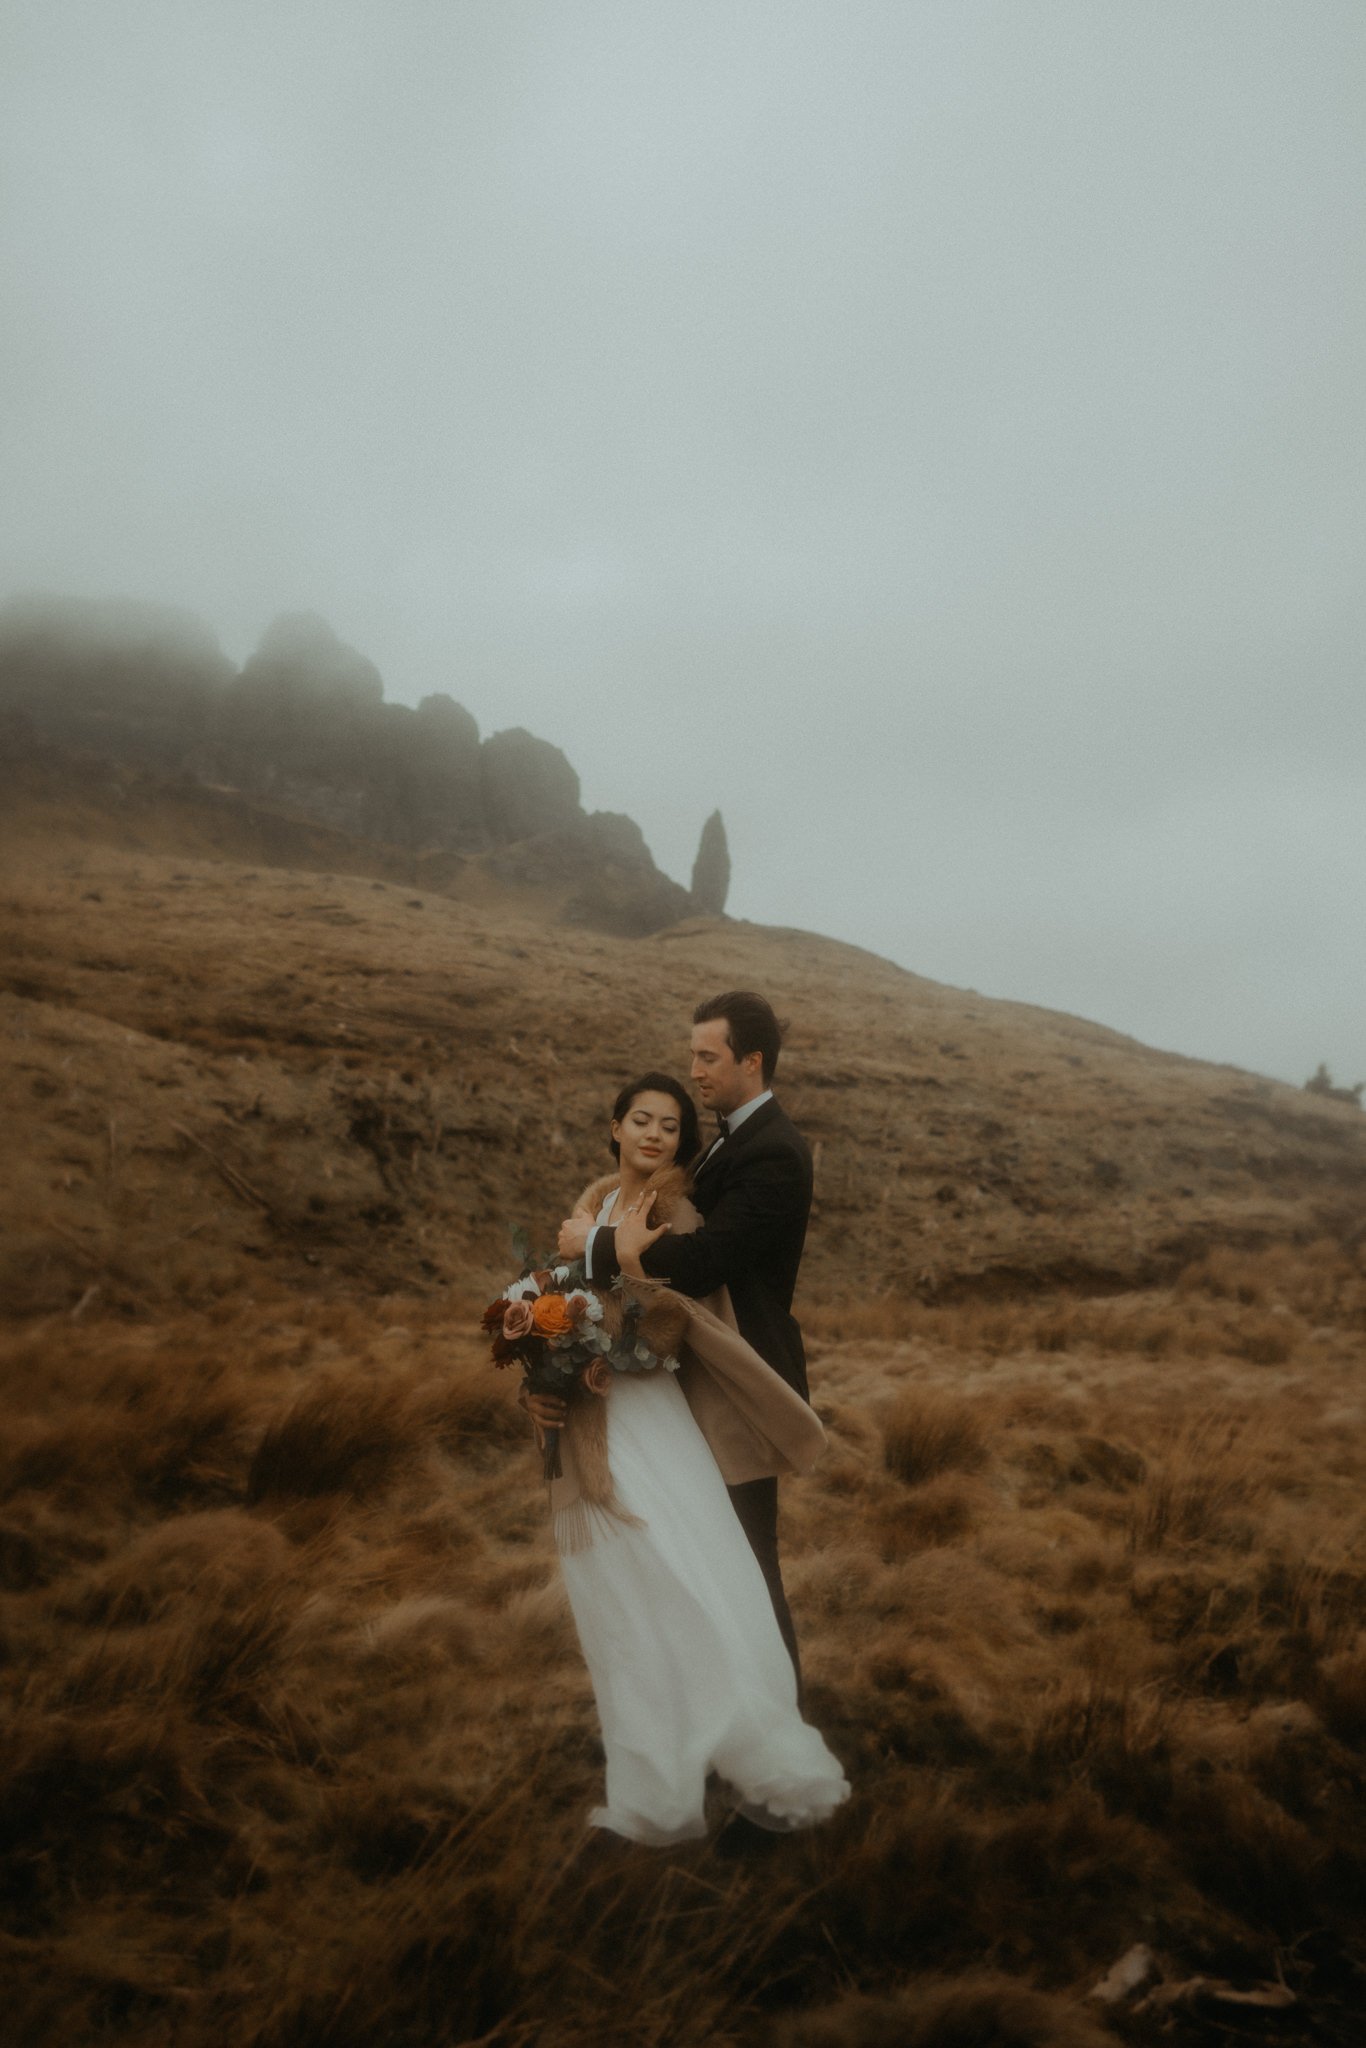  An Intimate Isle of Skye Adventure Elopement | Isle of Skye Elopement Photographer and Filmmaker 